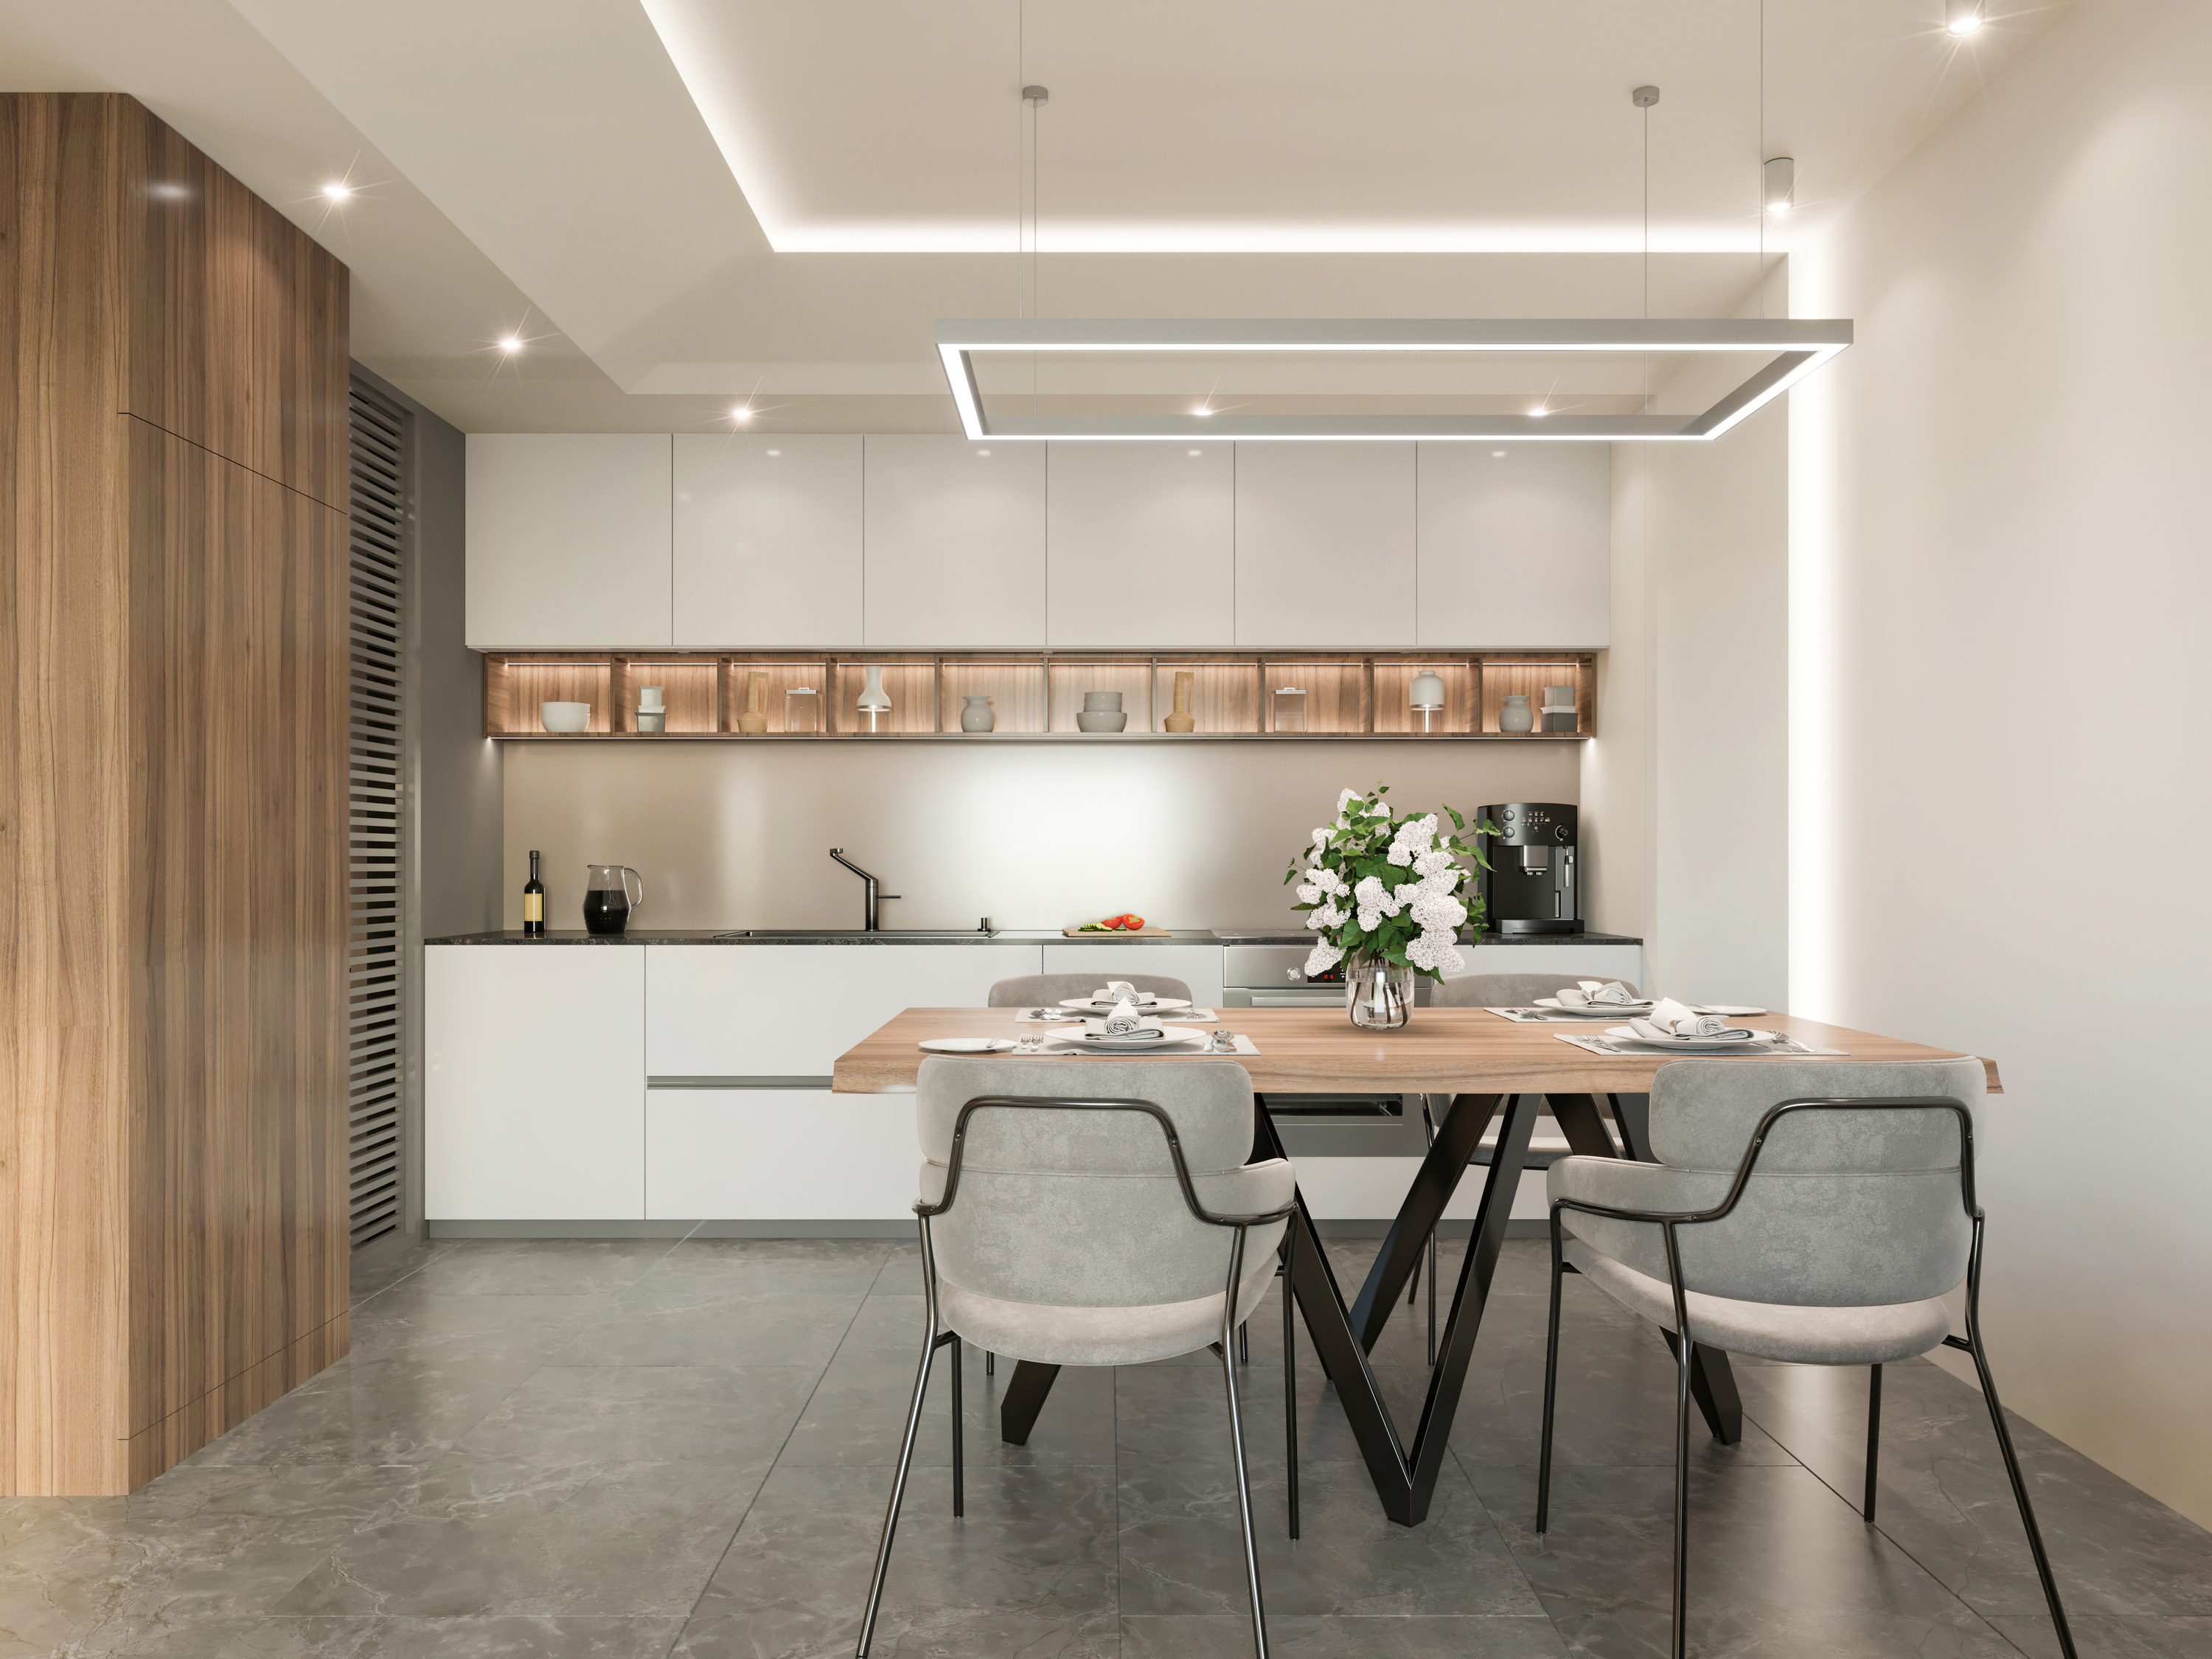 Concrete floor in a white kitchen